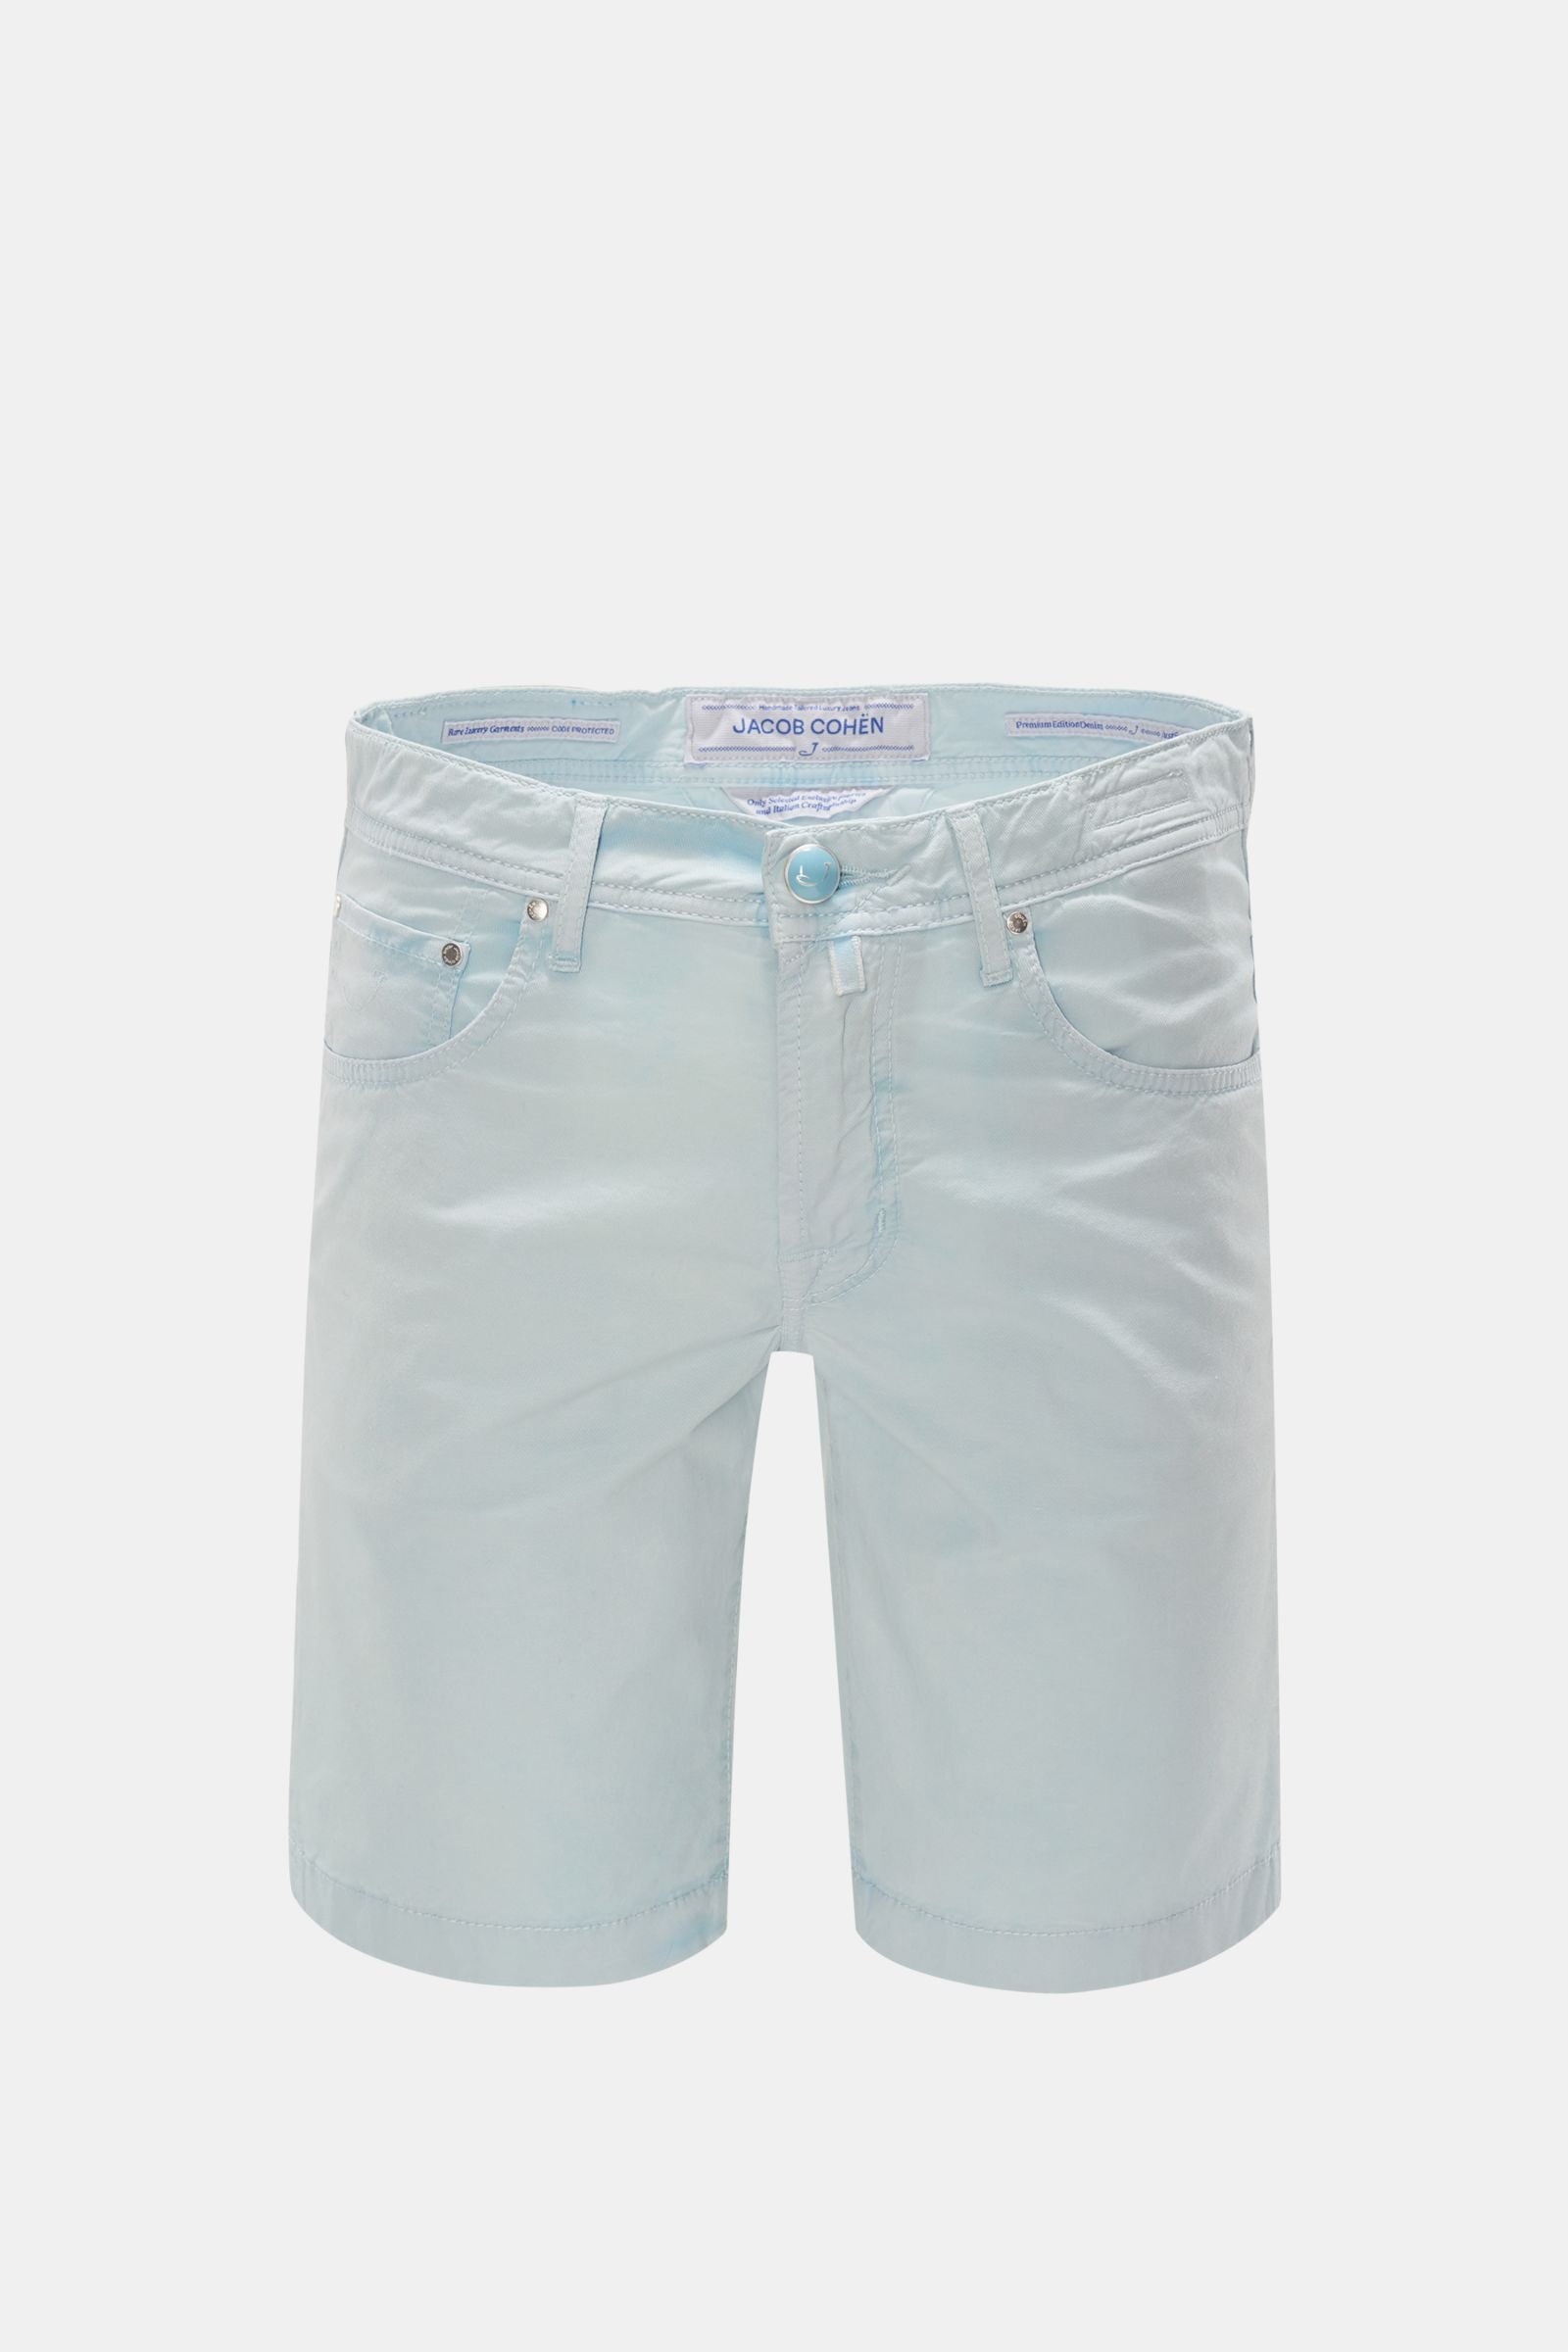 Bermuda shorts 'J6636 Comfort Slim Fit' pastel blue